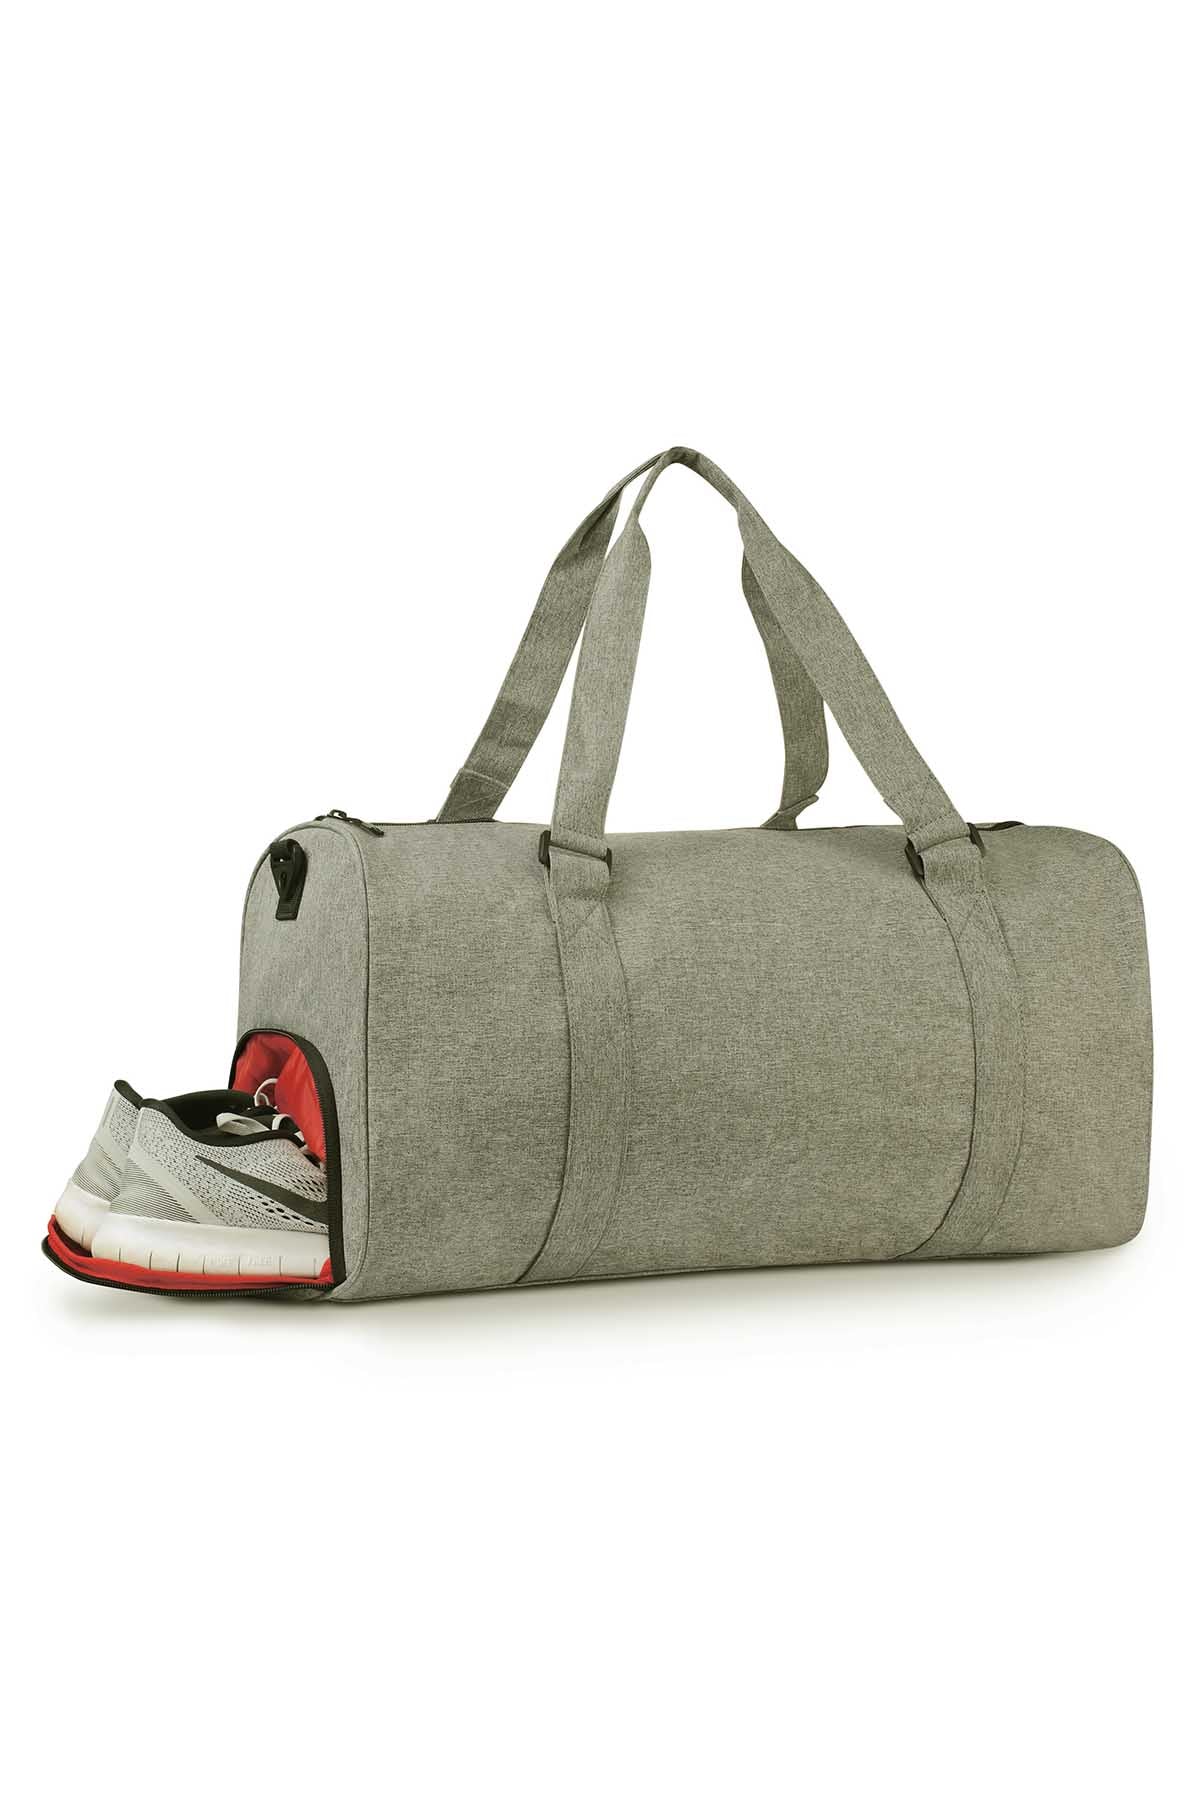 Something Strong GREY Zandago Duffle Bag with Sneaker Holder